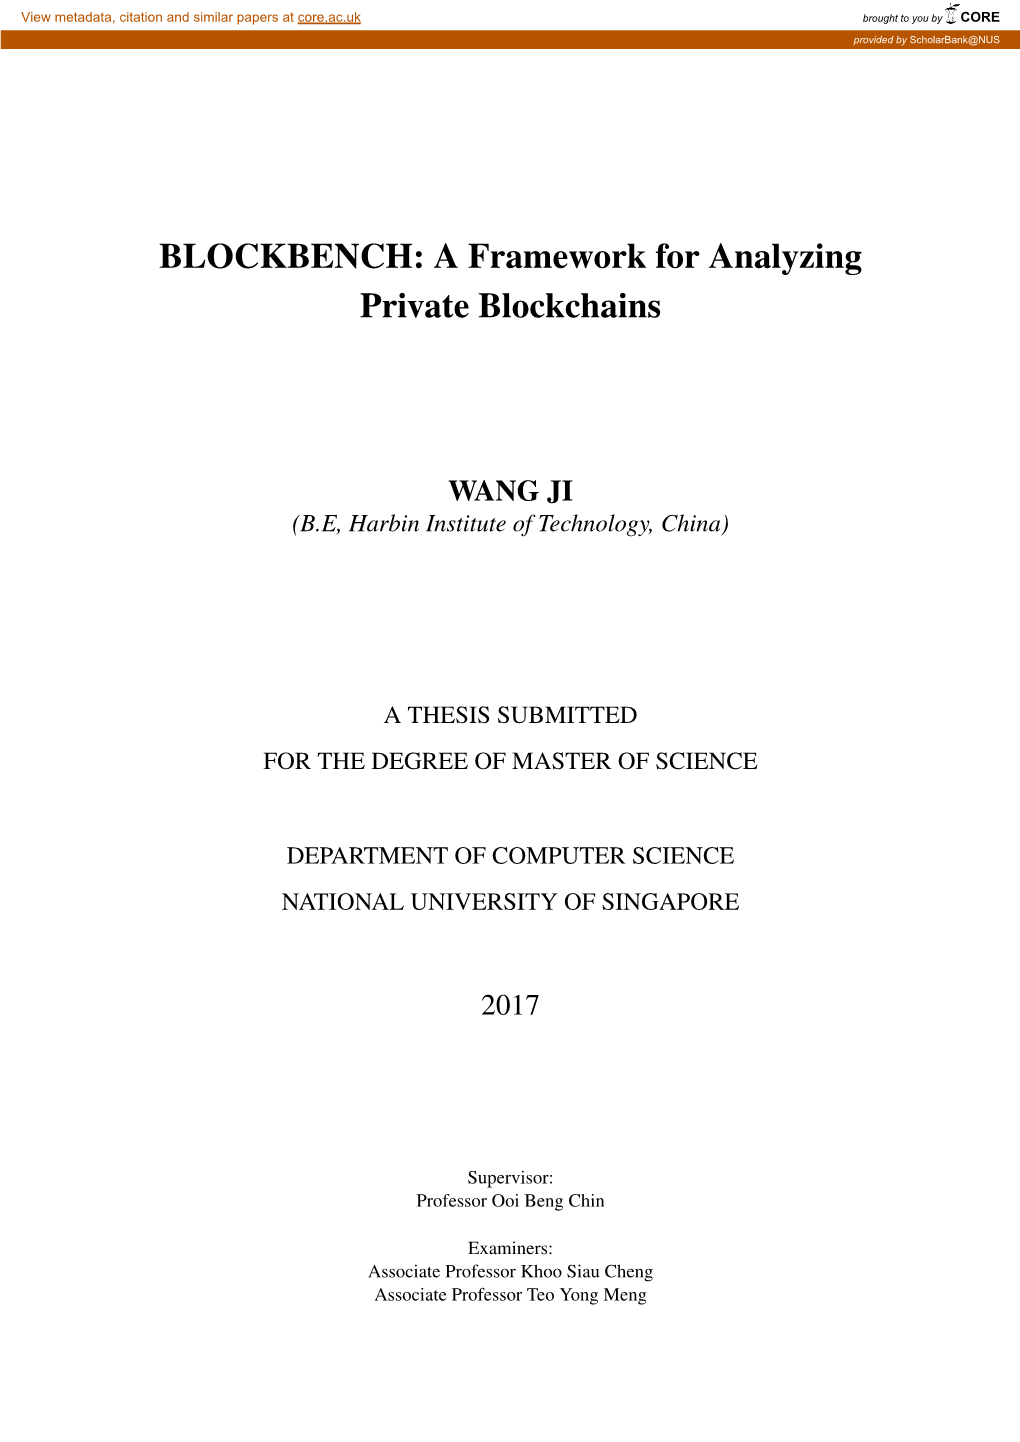 BLOCKBENCH: a Framework for Analyzing Private Blockchains